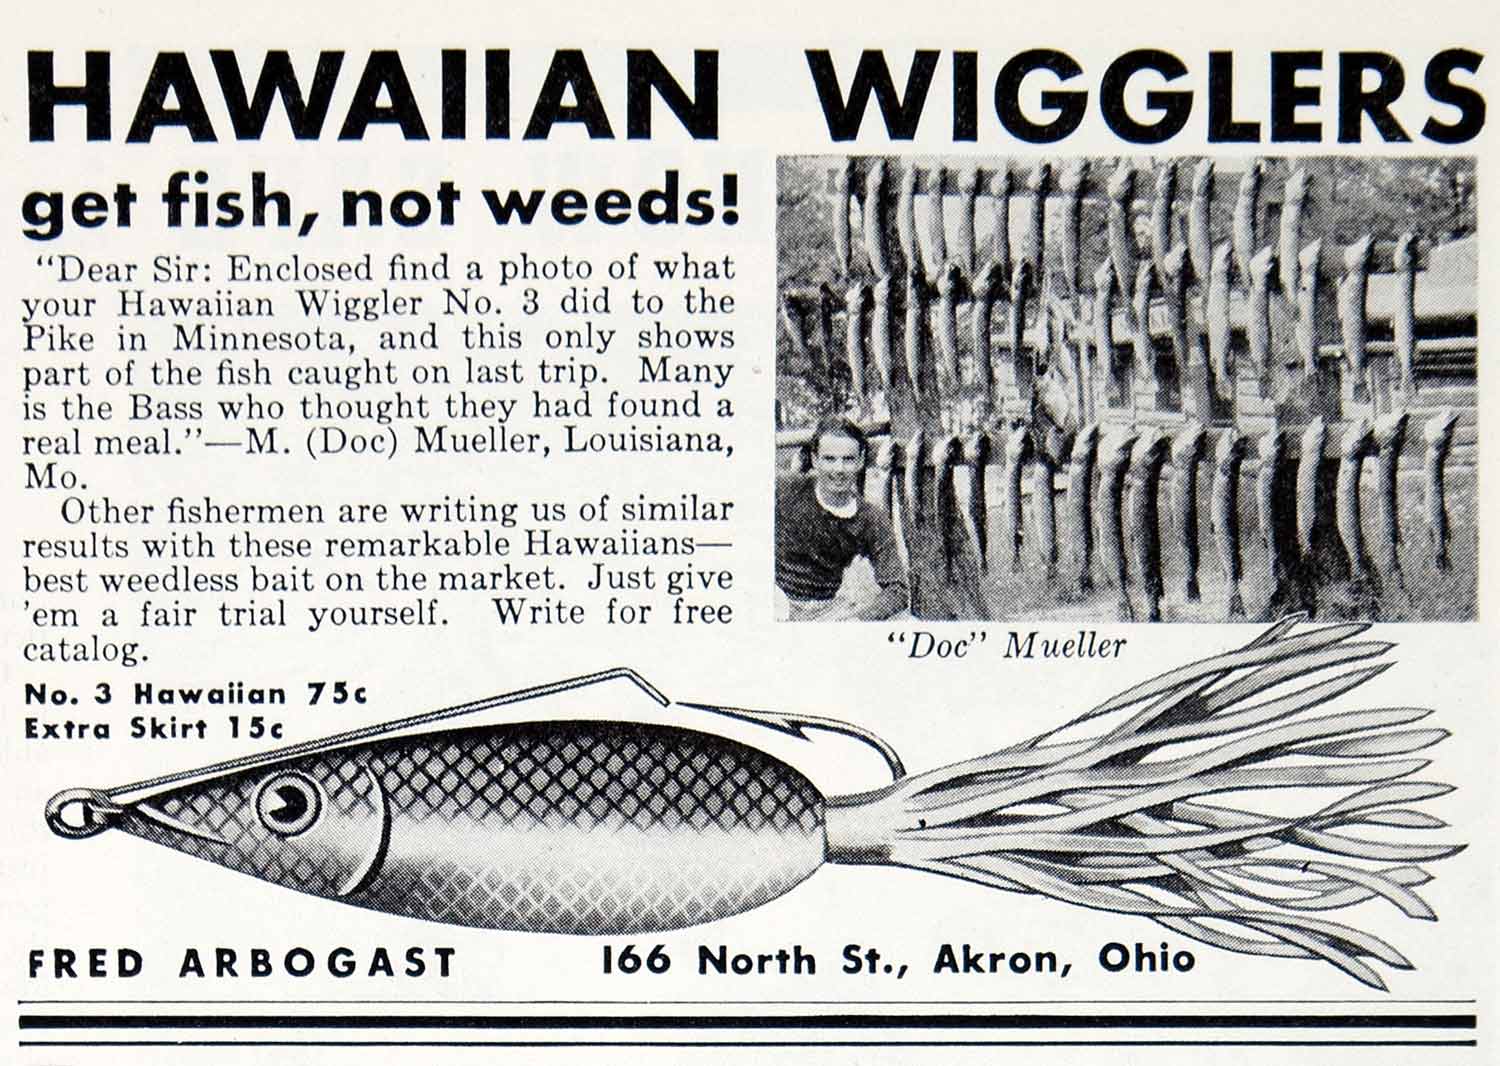 VINTAGE FISHING LURE Lot! Old Weedless Hawaiian Wigglers! Fred